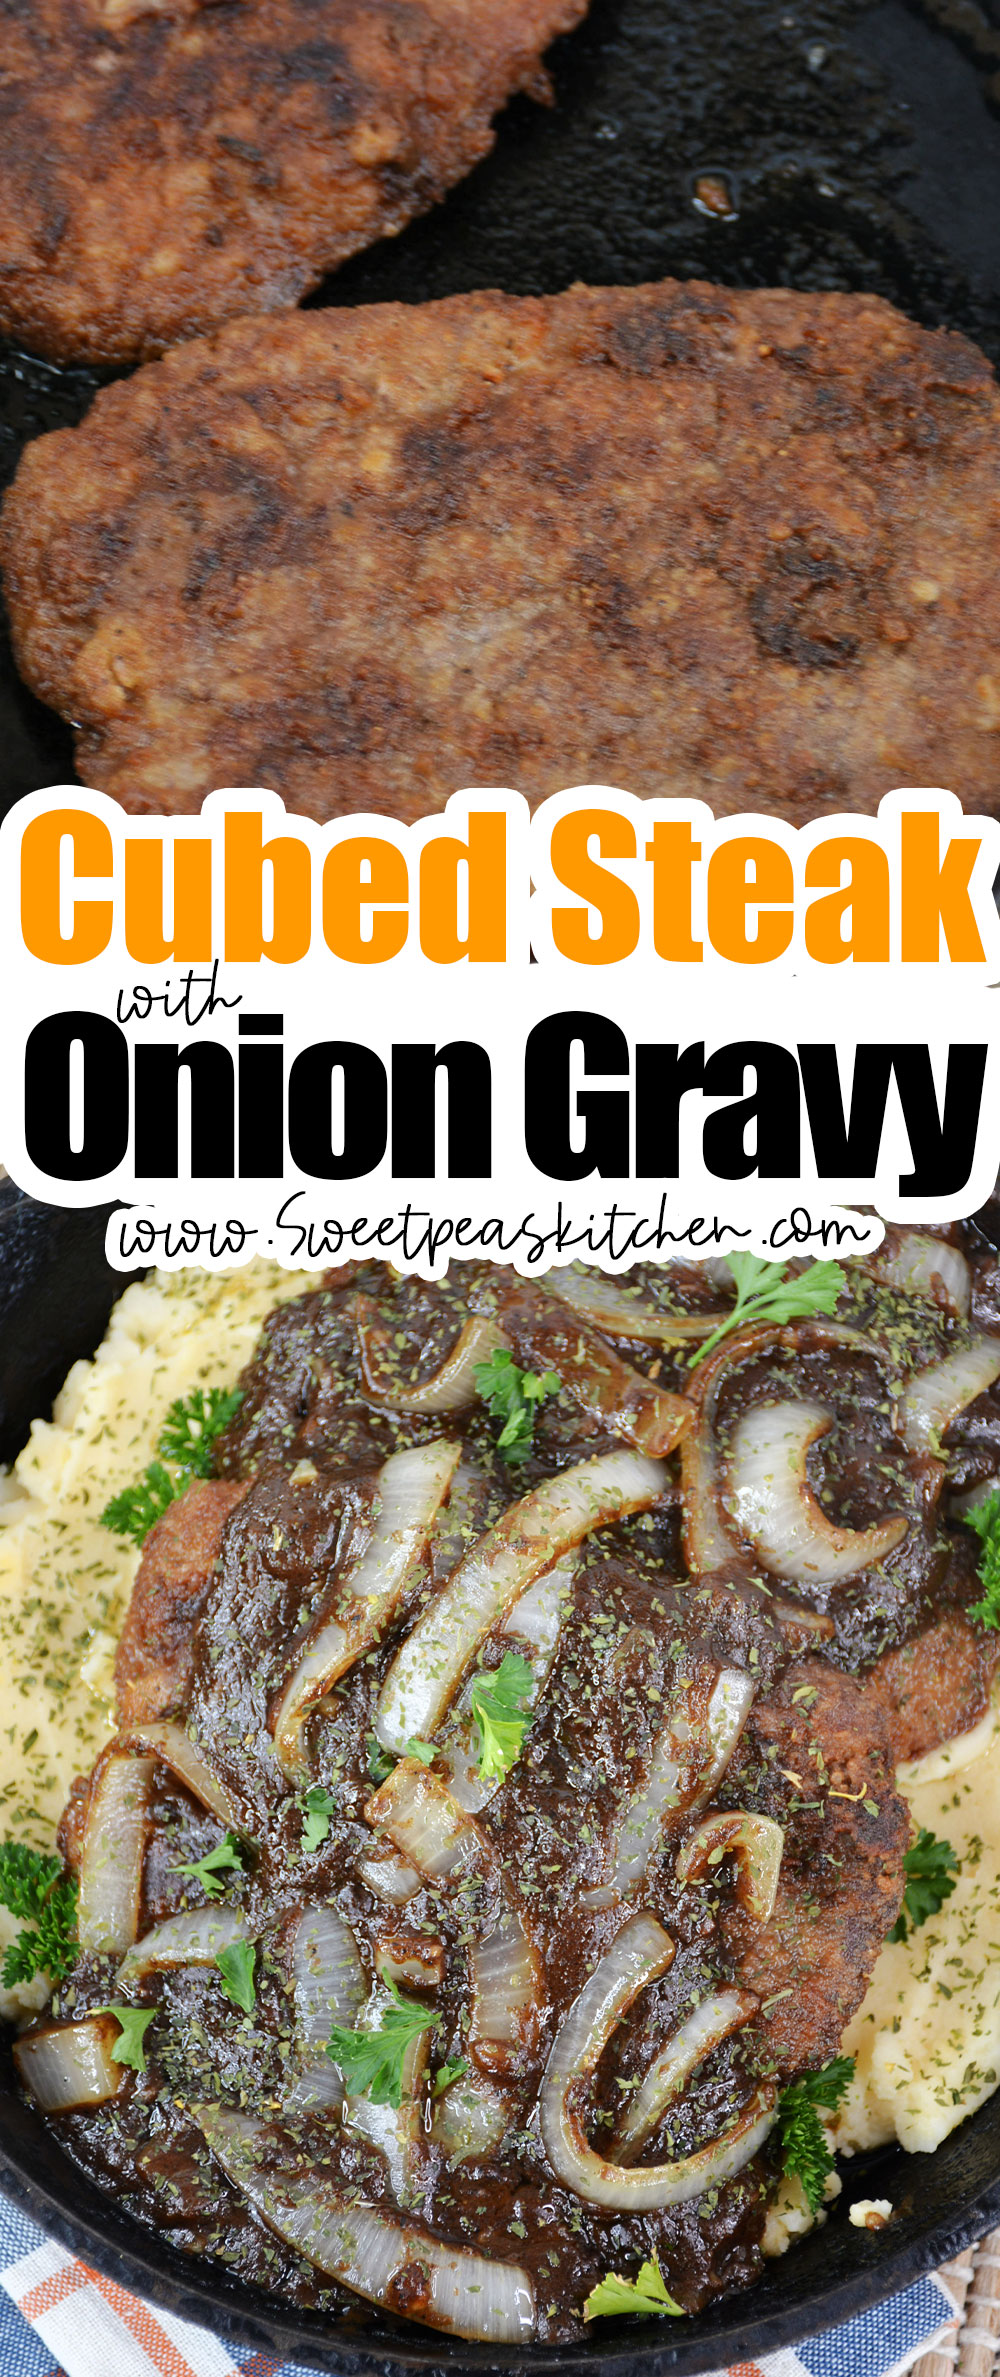 Cubed Steak with Onion Gravy